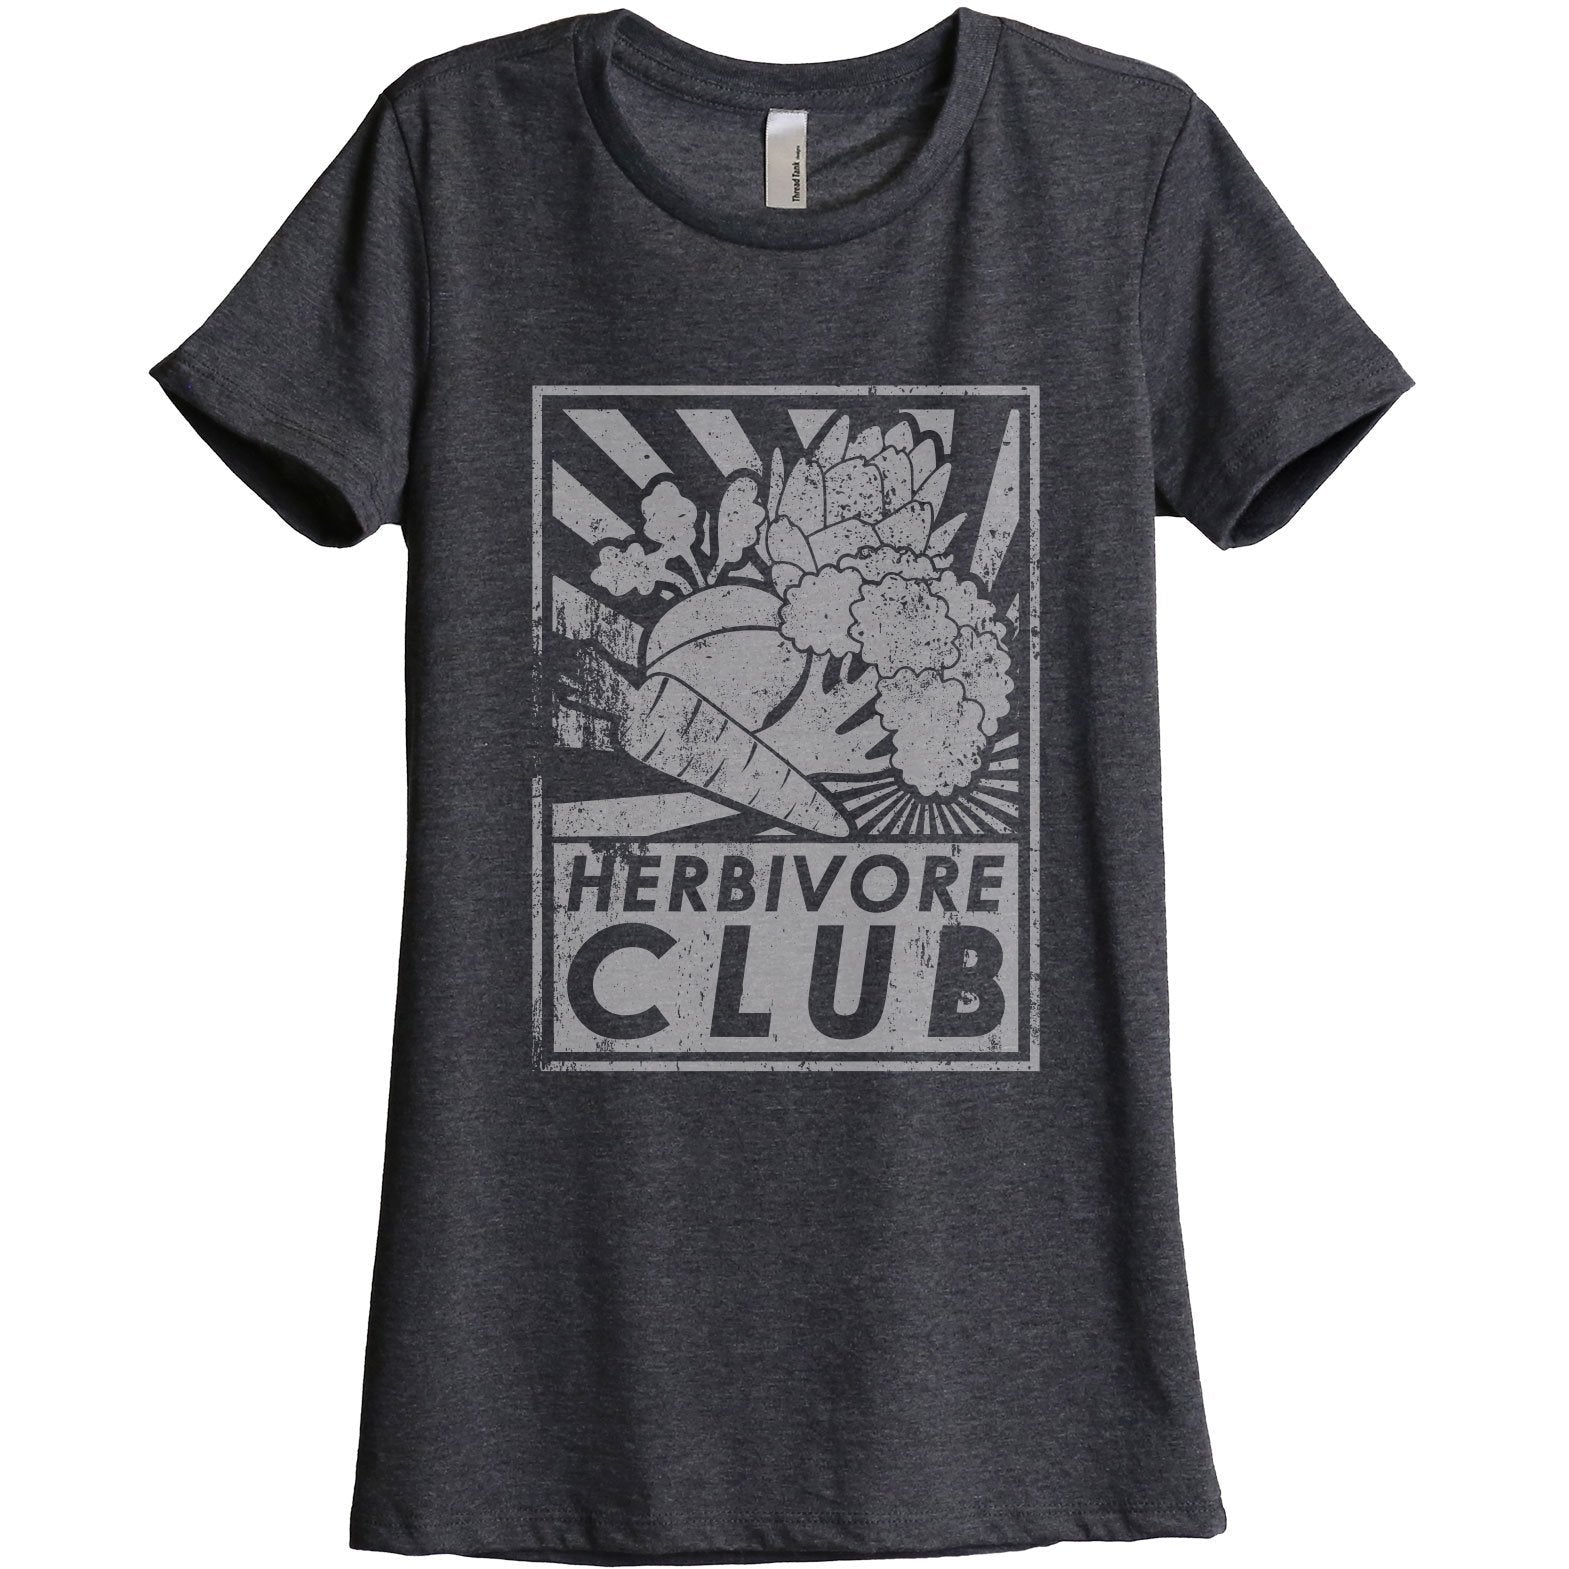 Herbivore Club Women's Relaxed Crewneck T-Shirt Top Tee Heather Rouge
